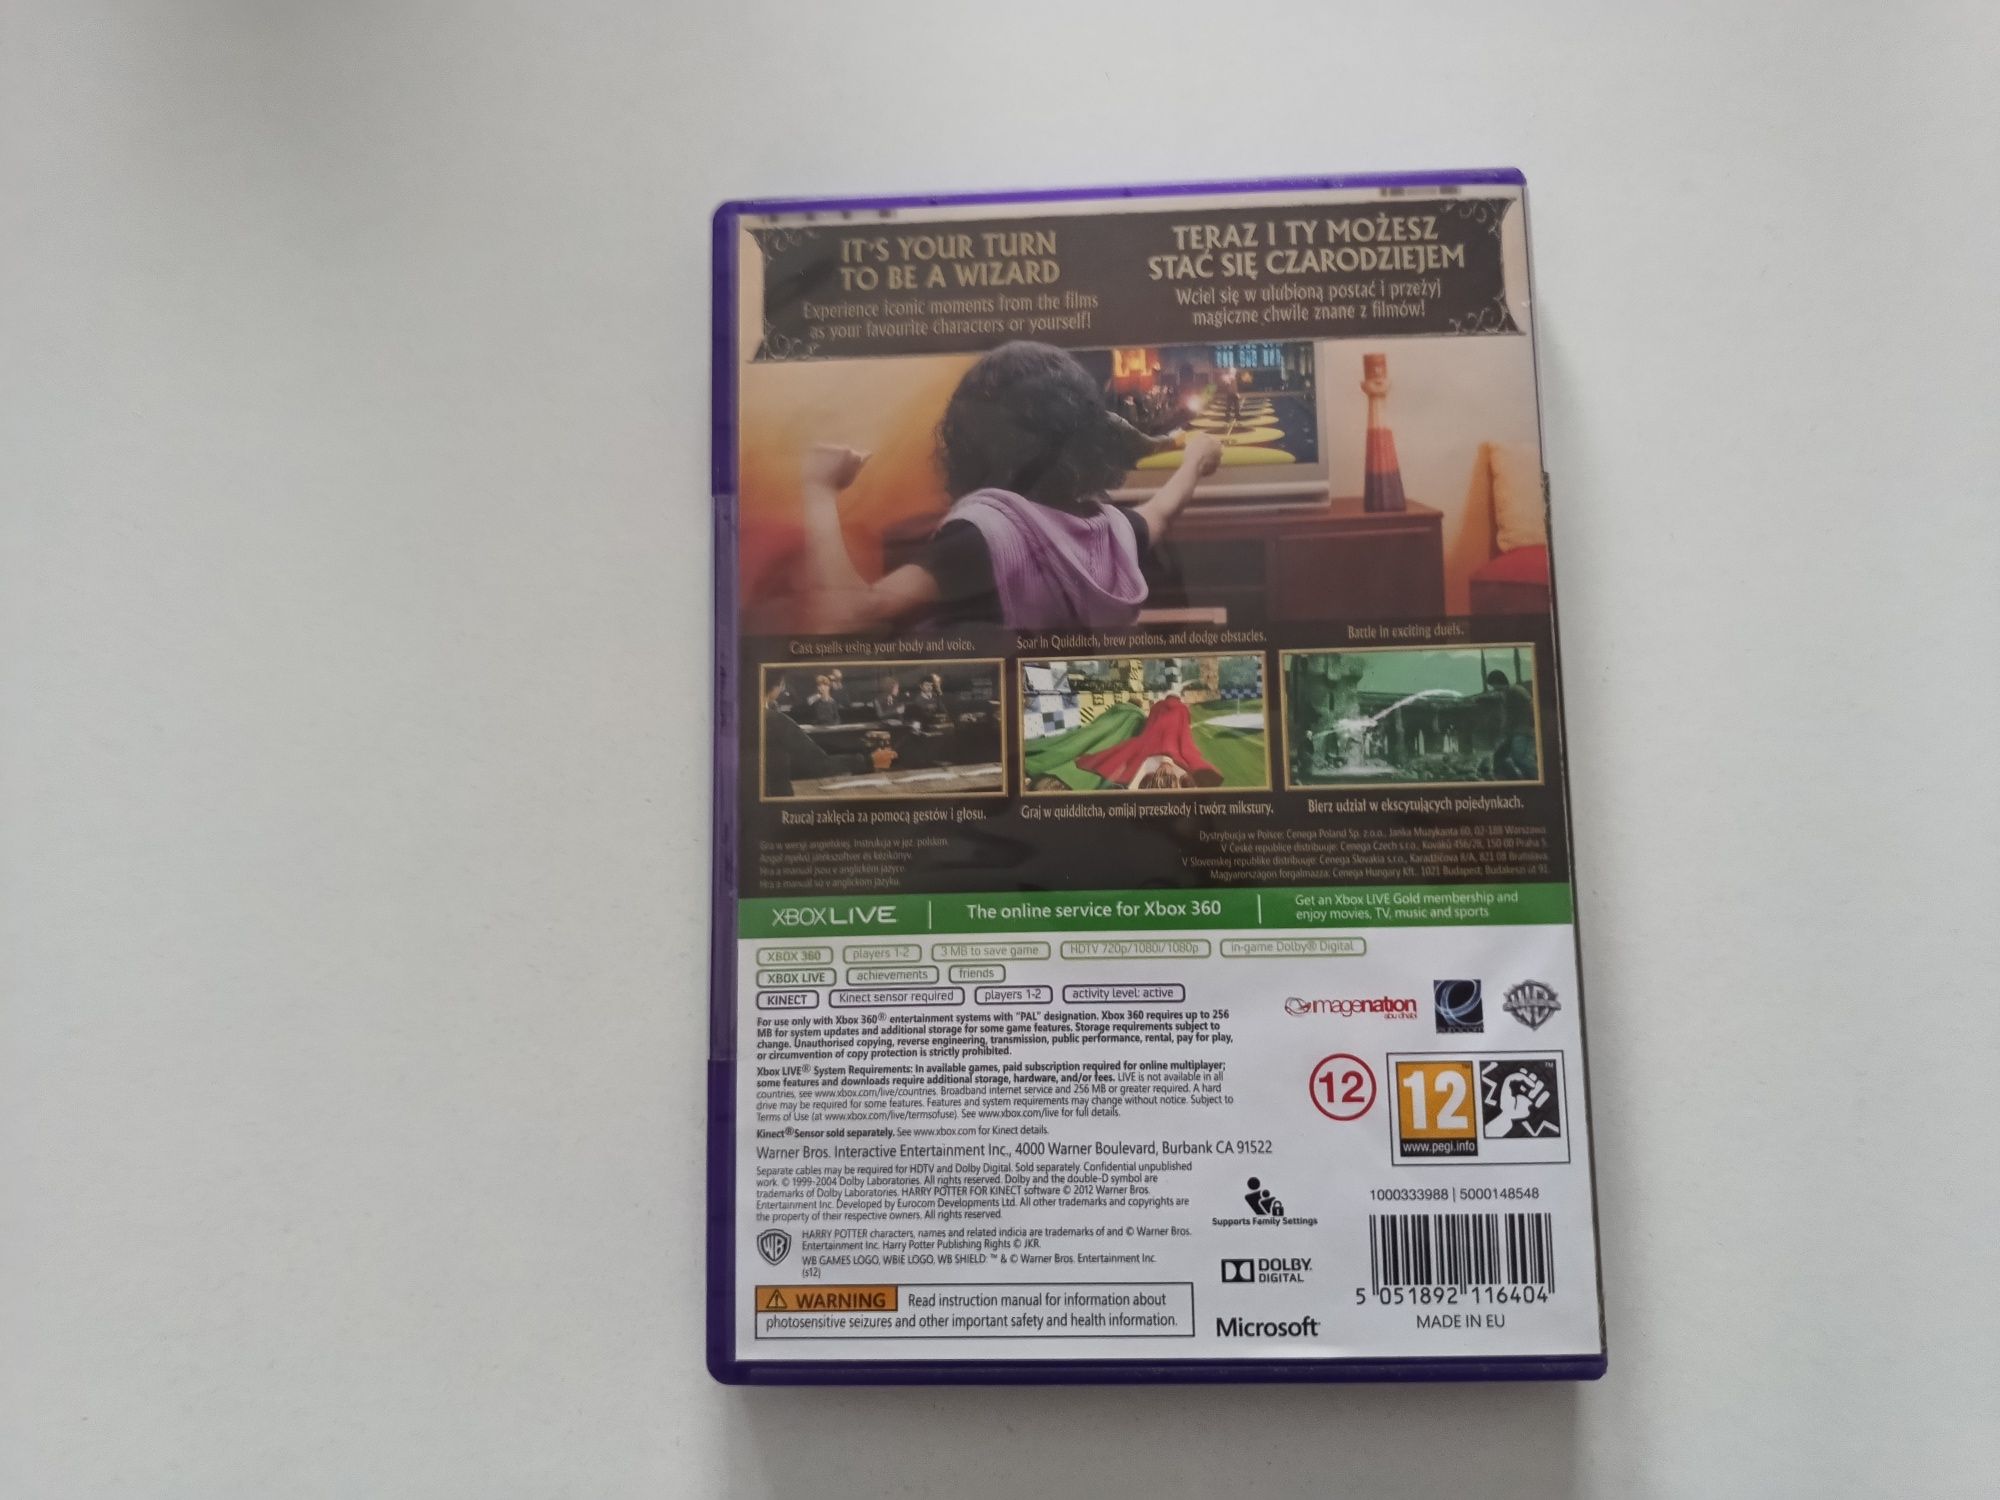 Gra Xbox 360 Harry Potter For KINECT (instrukcja Polska)